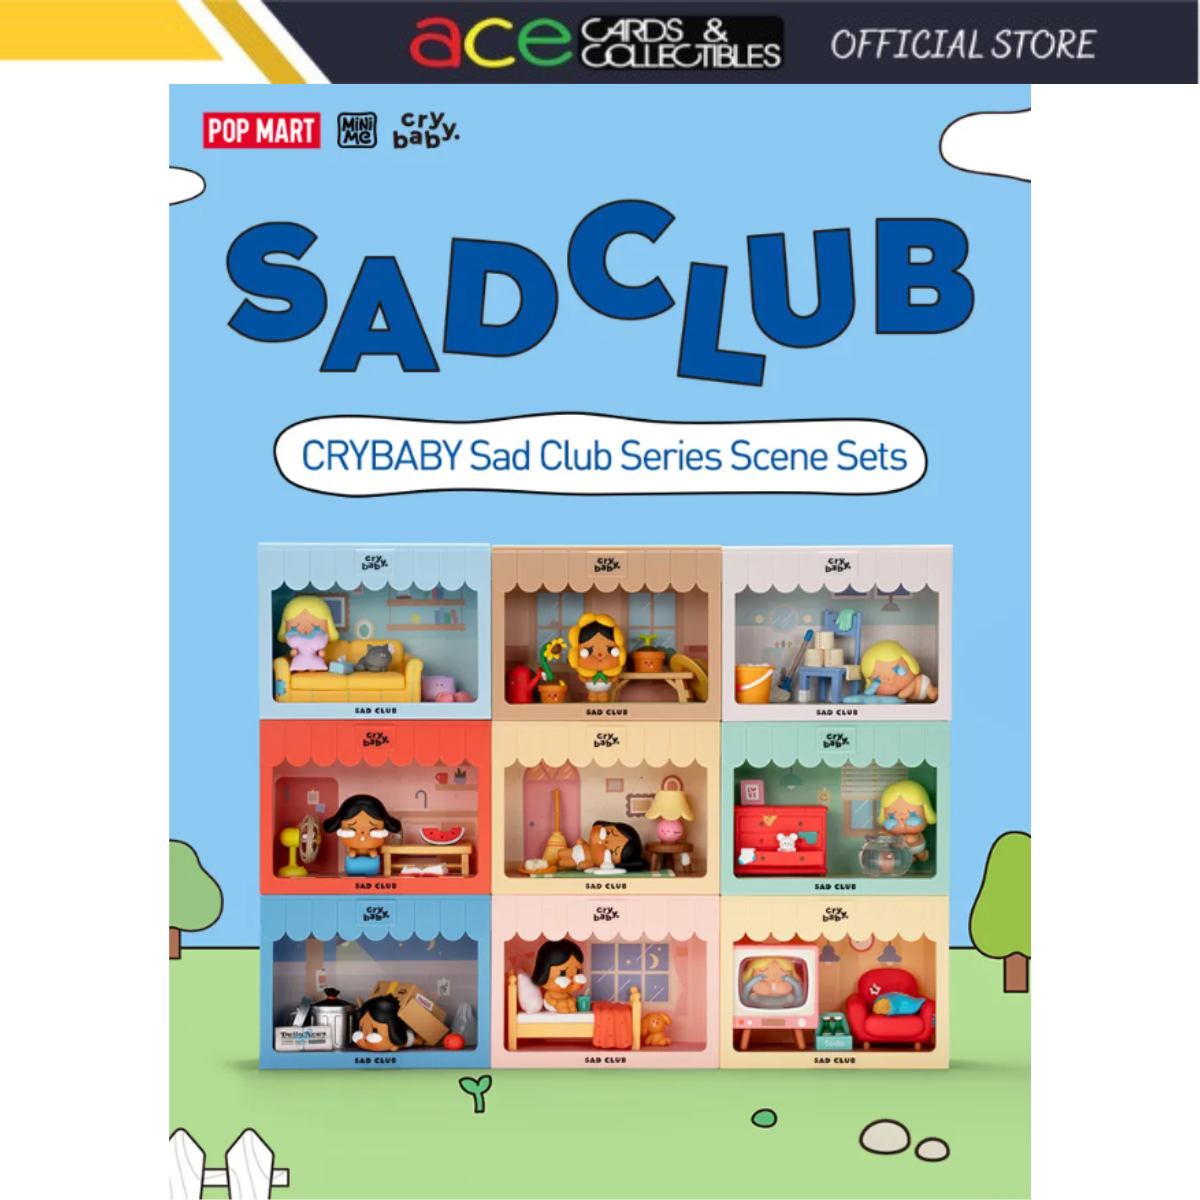 POP MART Crybaby Sad Club Series Scene Sets-Single Box (Random)-Pop Mart-Ace Cards & Collectibles